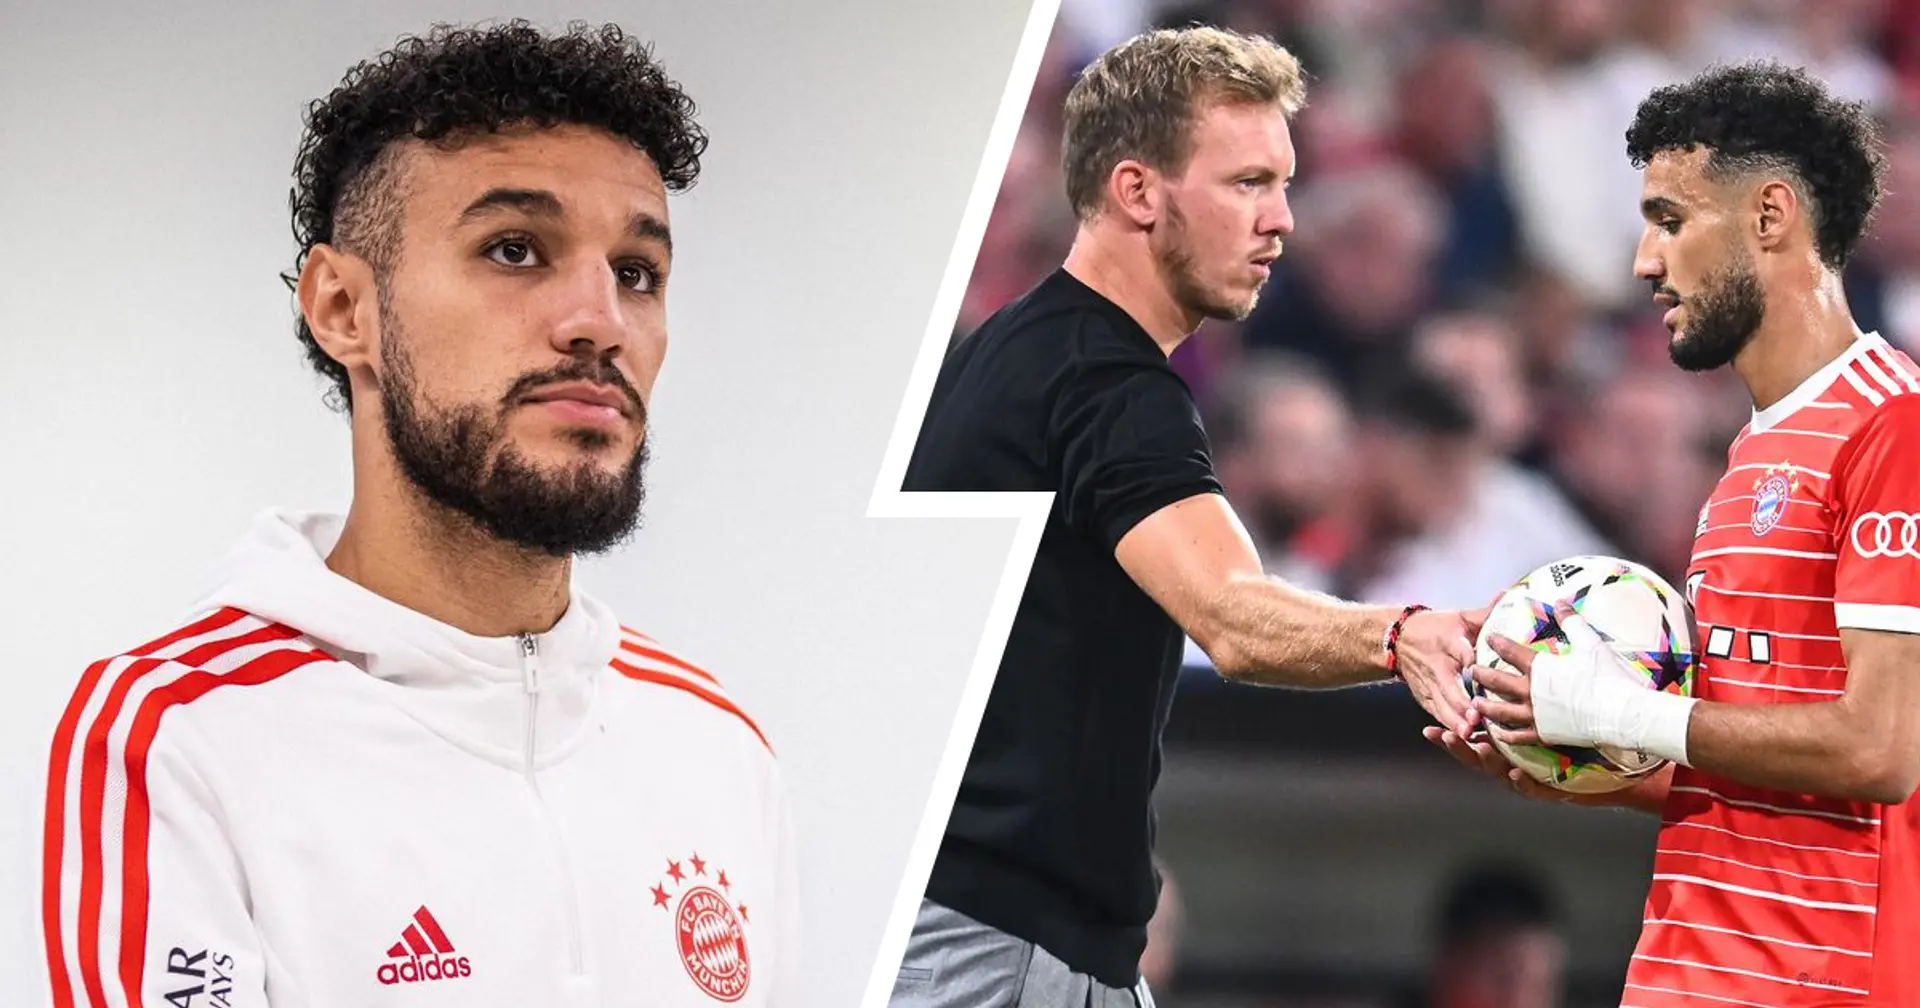 "Ballsicherheit, Technik, Körperkontrolle": Bayern-Fan schwärmt davon, was Mazraoui der Mannschaft gibt